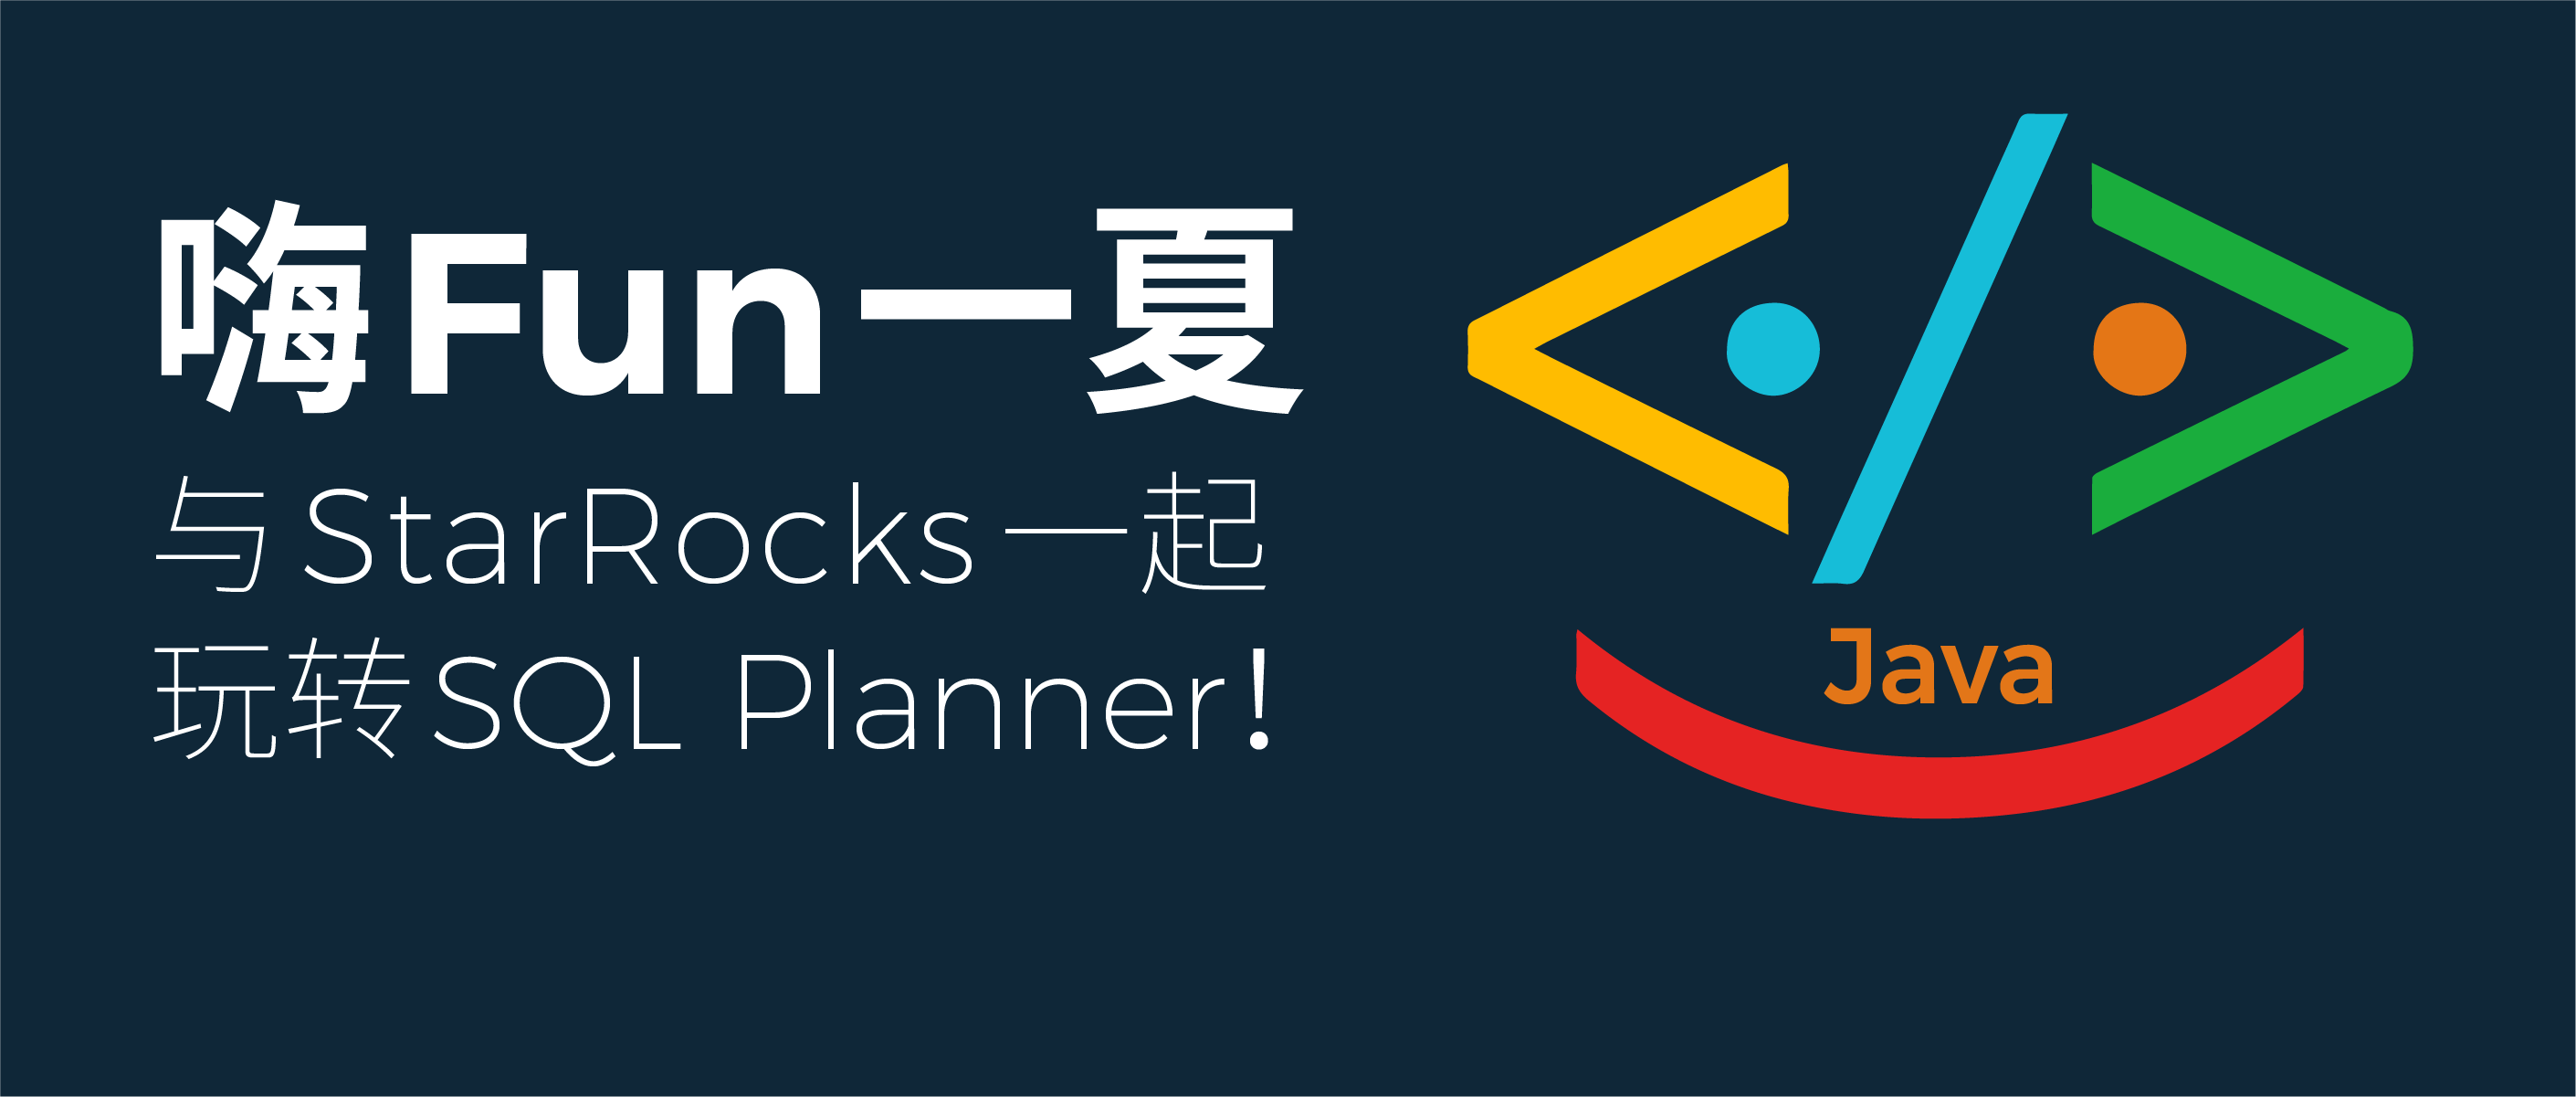 嗨 FUN 一夏，与 StarRocks 一起玩转 SQL Planner！